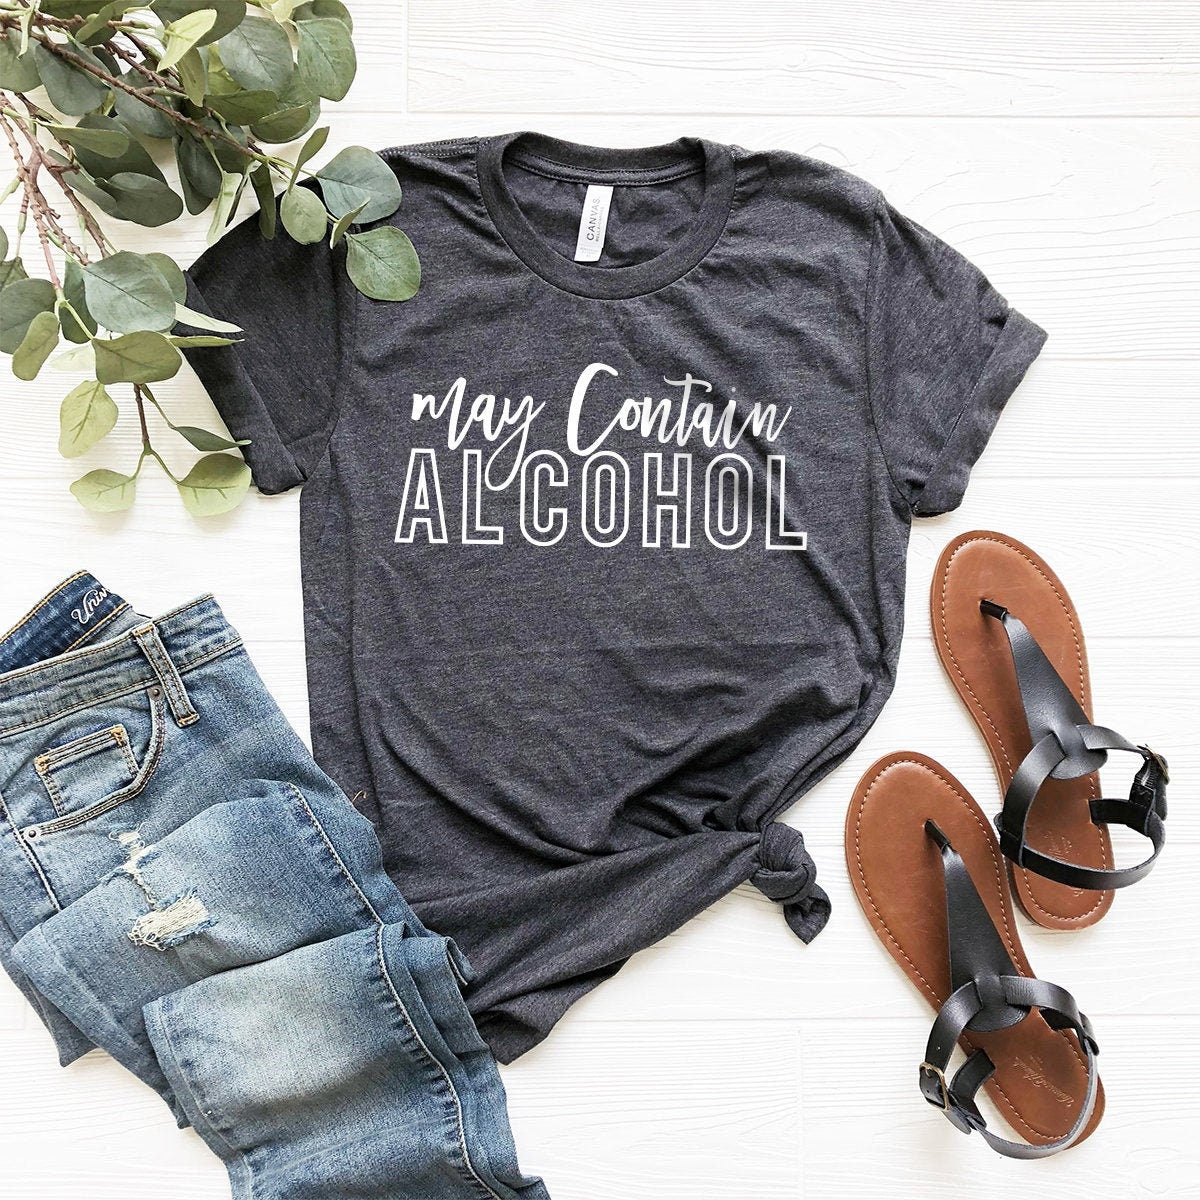 May Contain Alcohol Shirt, Alcohol Shirt, Day Drink Shirt, Drinking Party Shirt, Funny Alcohol Shirt, Drinking Shirt, Alcoholic Shirt - Fastdeliverytees.com